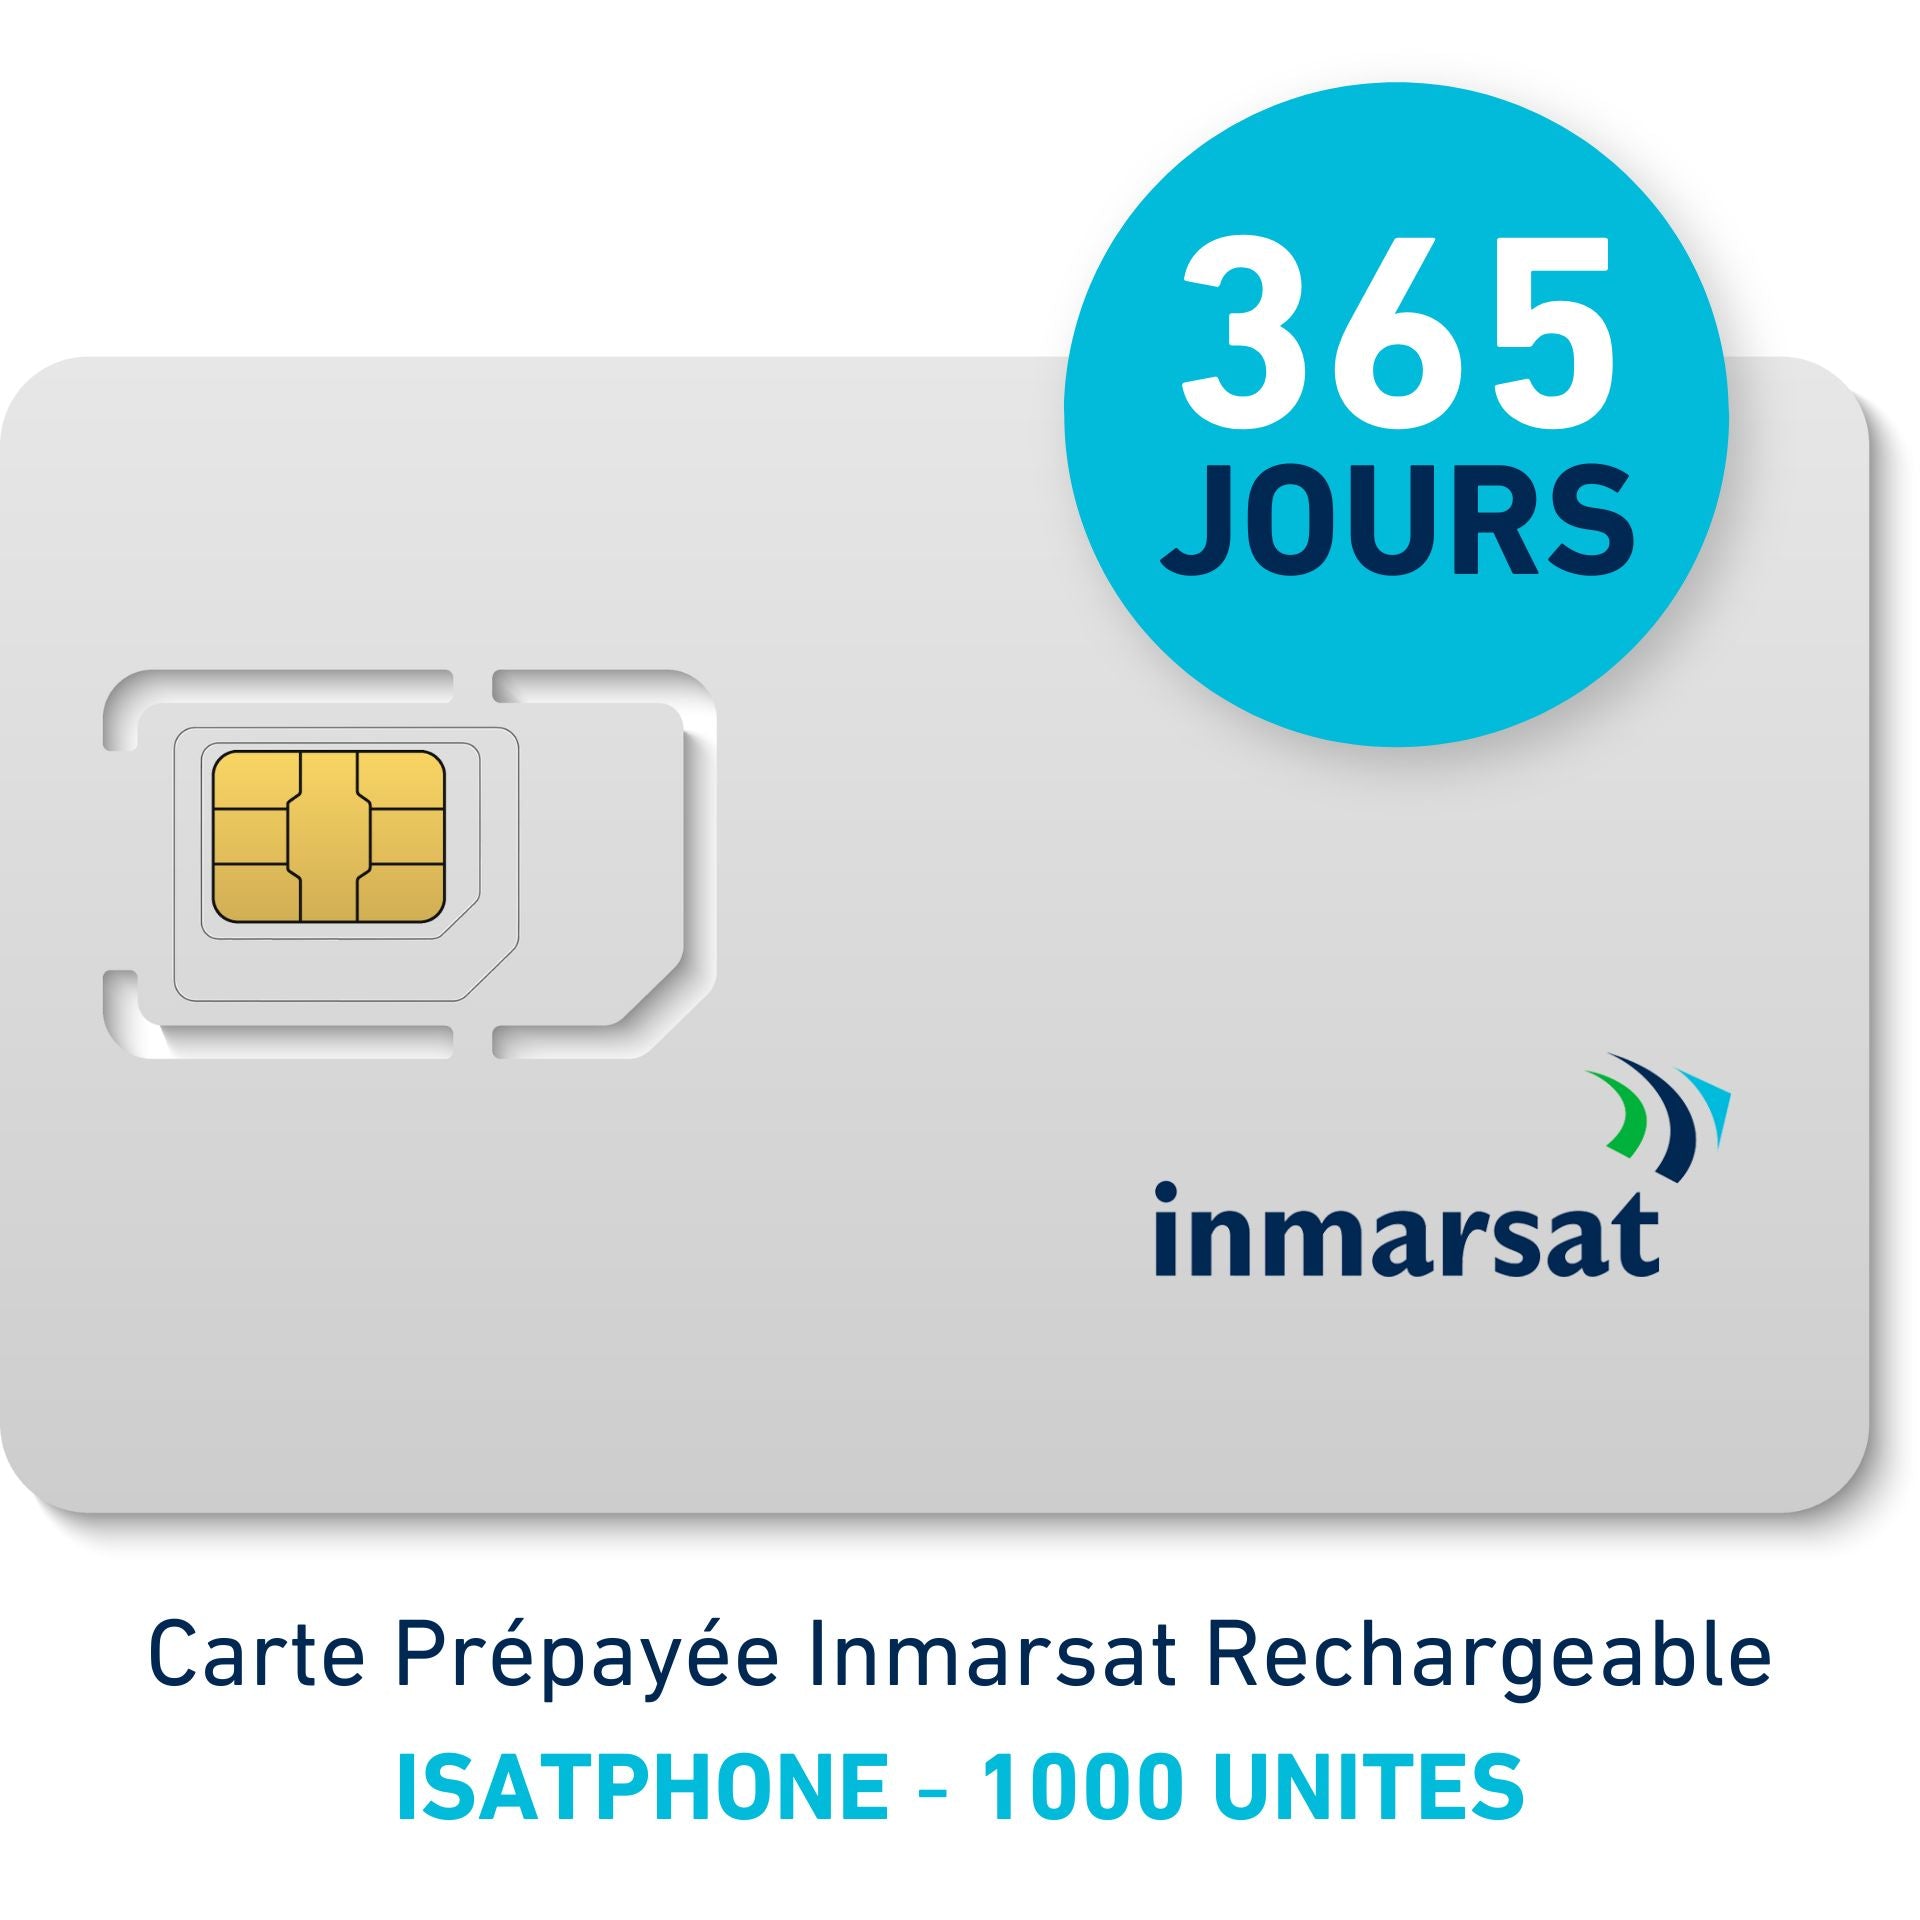 Carte Prépayée INMARSAT Rechargeable ISATPHONE - 1000 UNITES - 365 JOURS